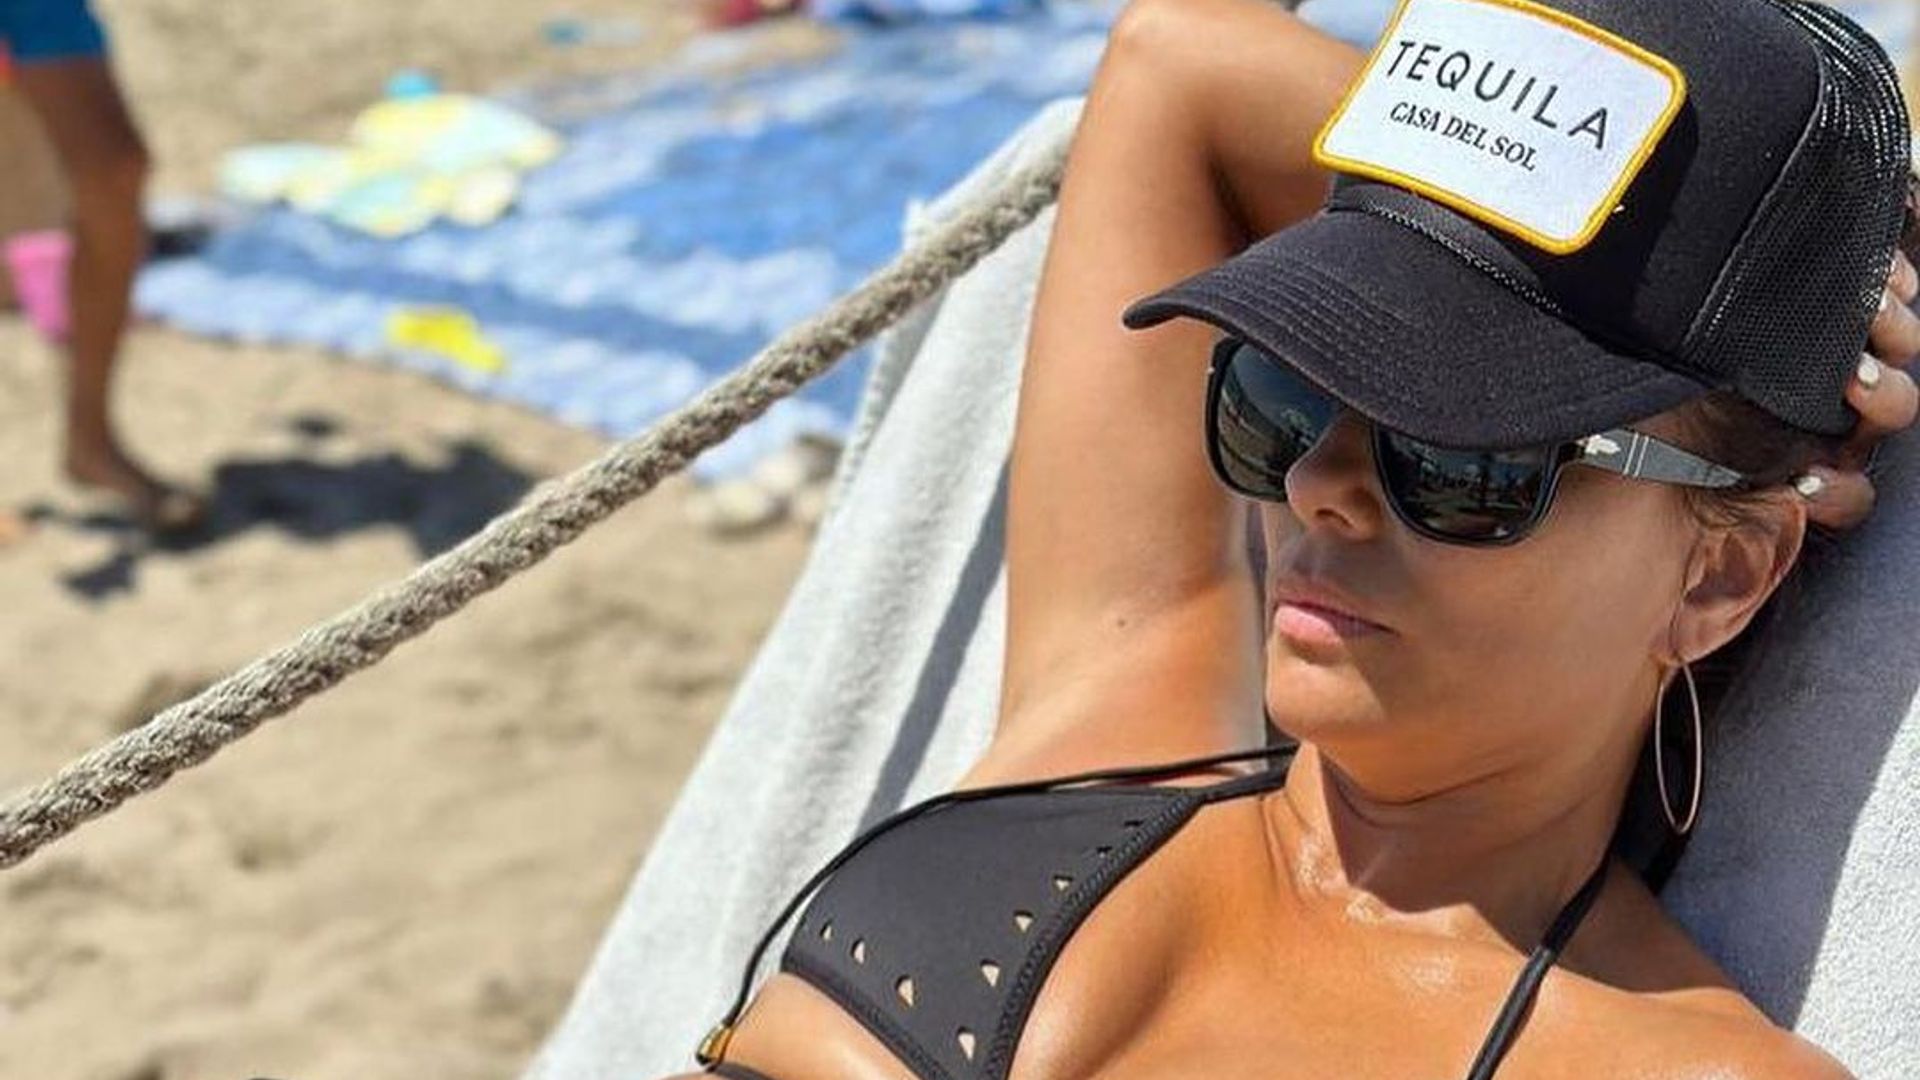 Eva Longoria sunbathing in a black bikini